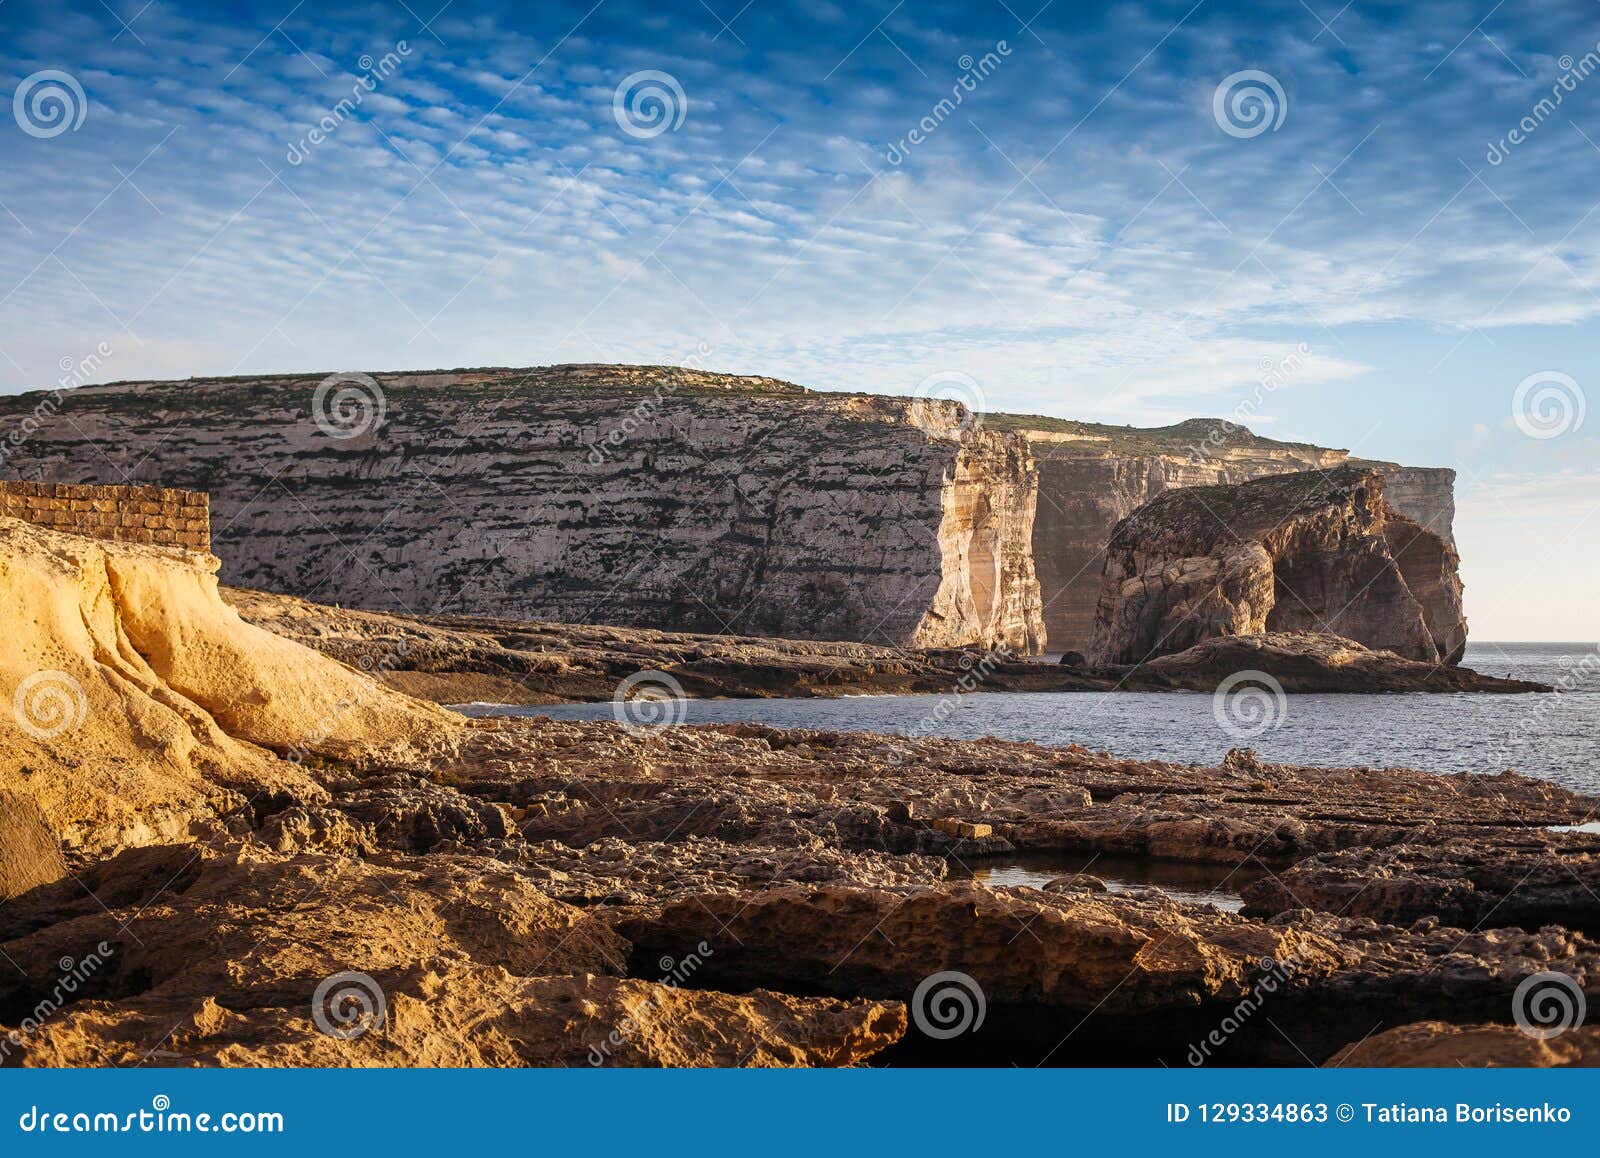 Dwejra Cliffs With Fungus Rock Stock Image Image Of Landmark Gozo